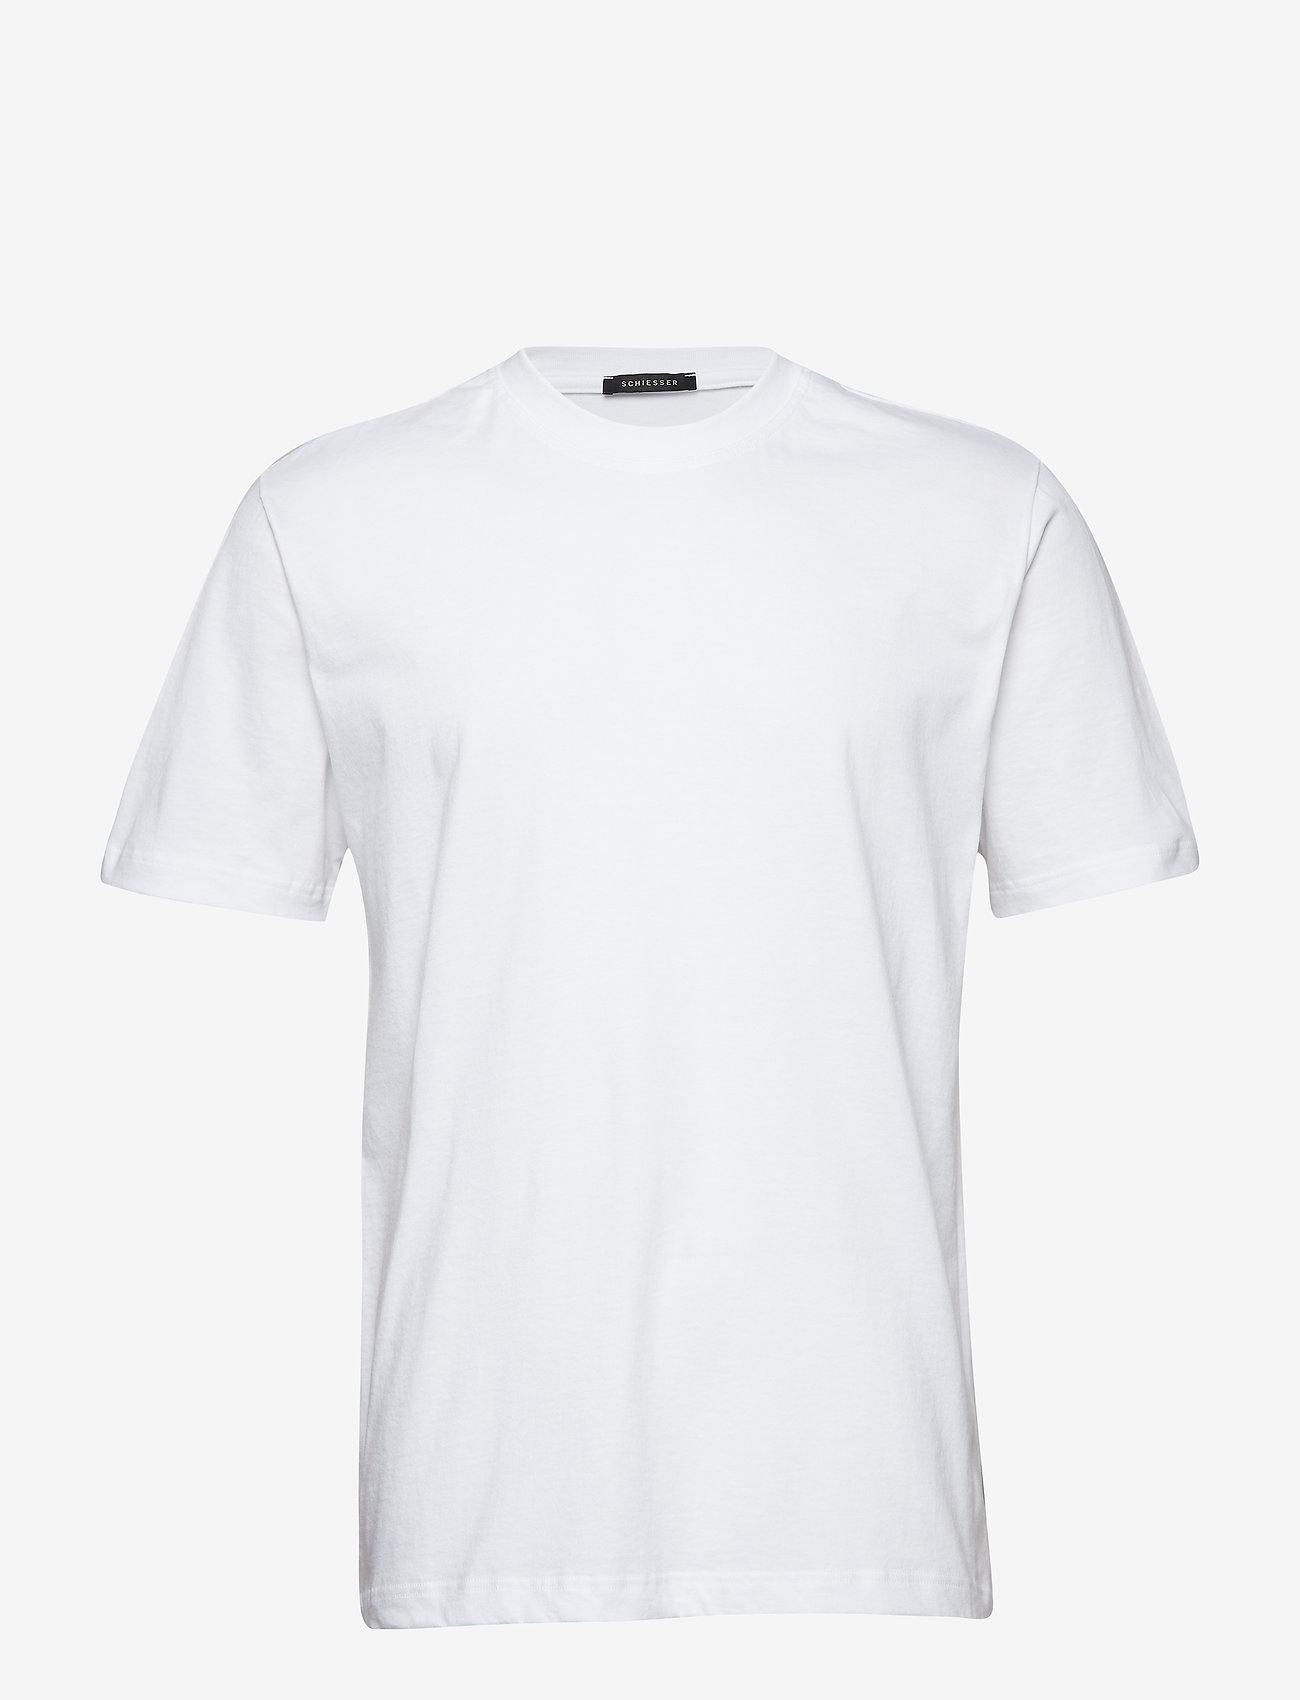 Schiesser - Shirt 1/2 - kurzärmelig - white - 1